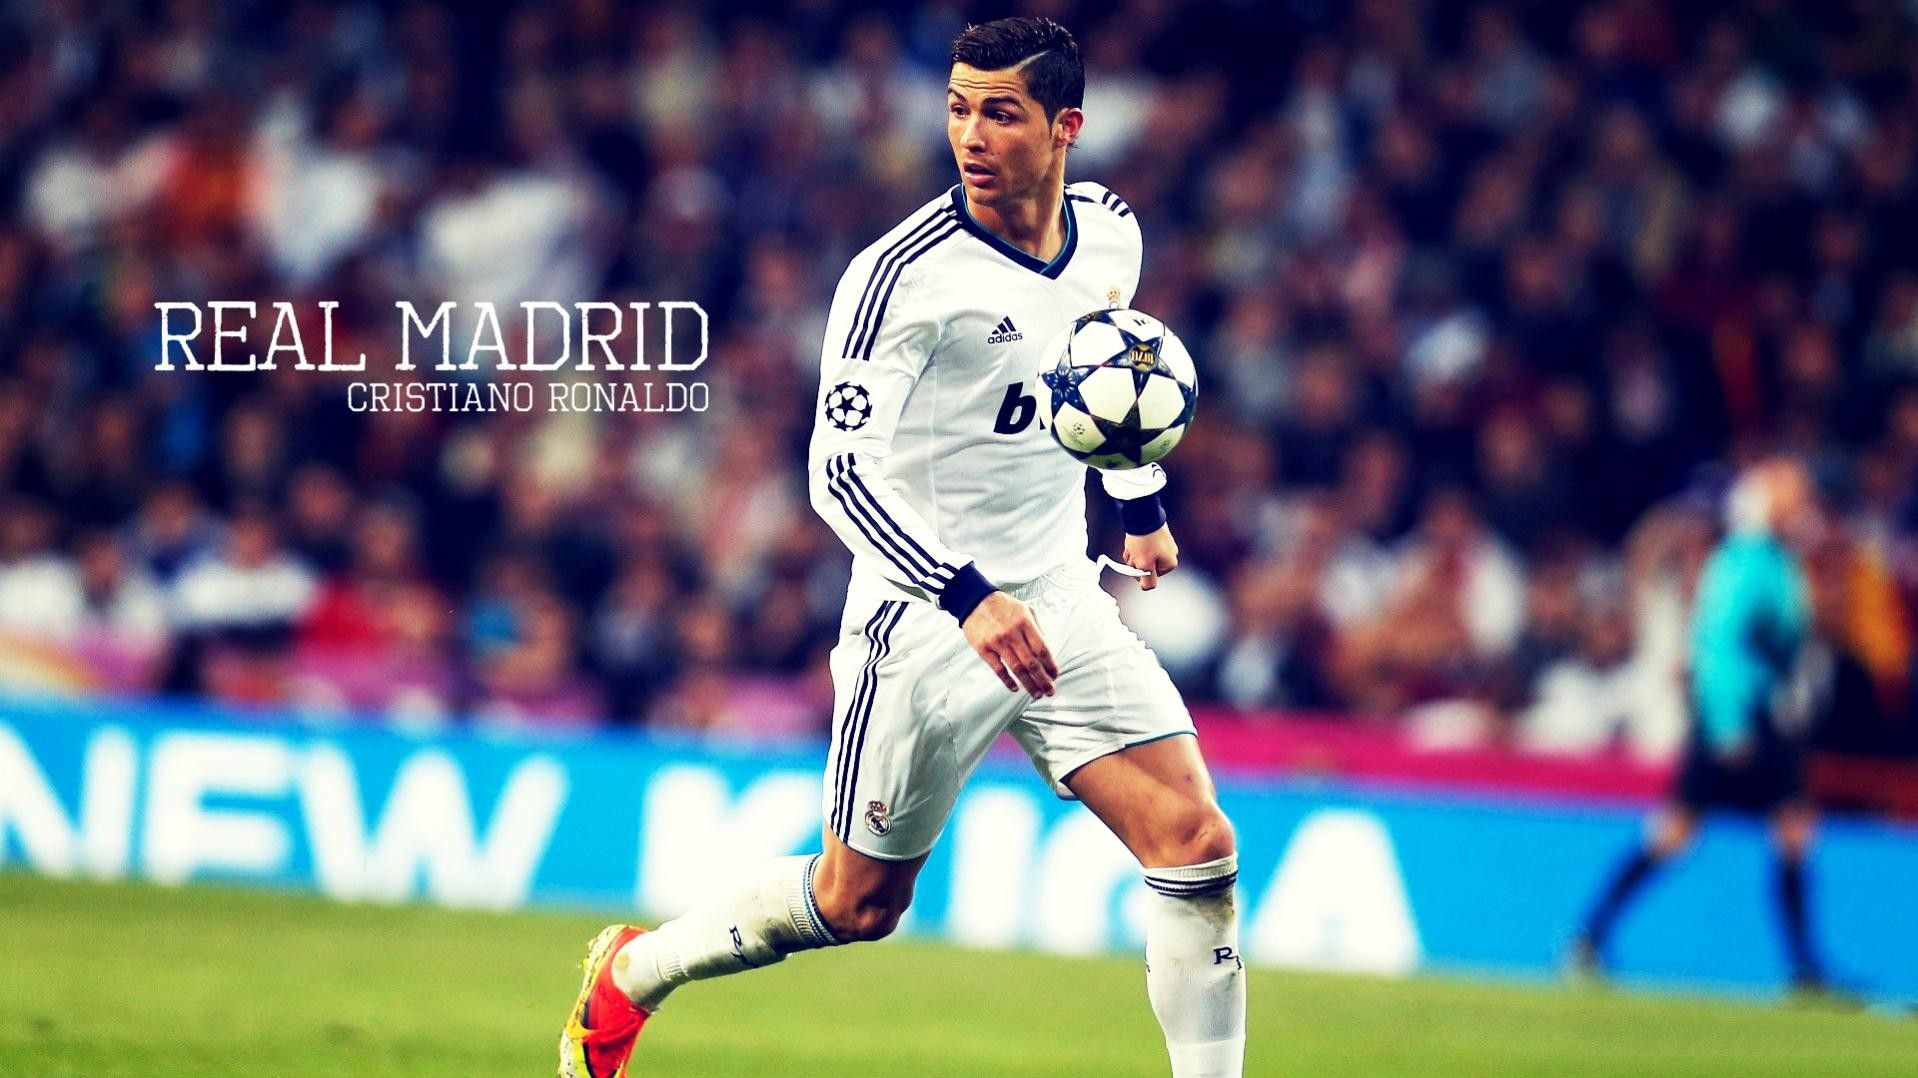 Cristiano Ronaldo Wallpaper, HD Ronaldo Image, Free Wallpaper